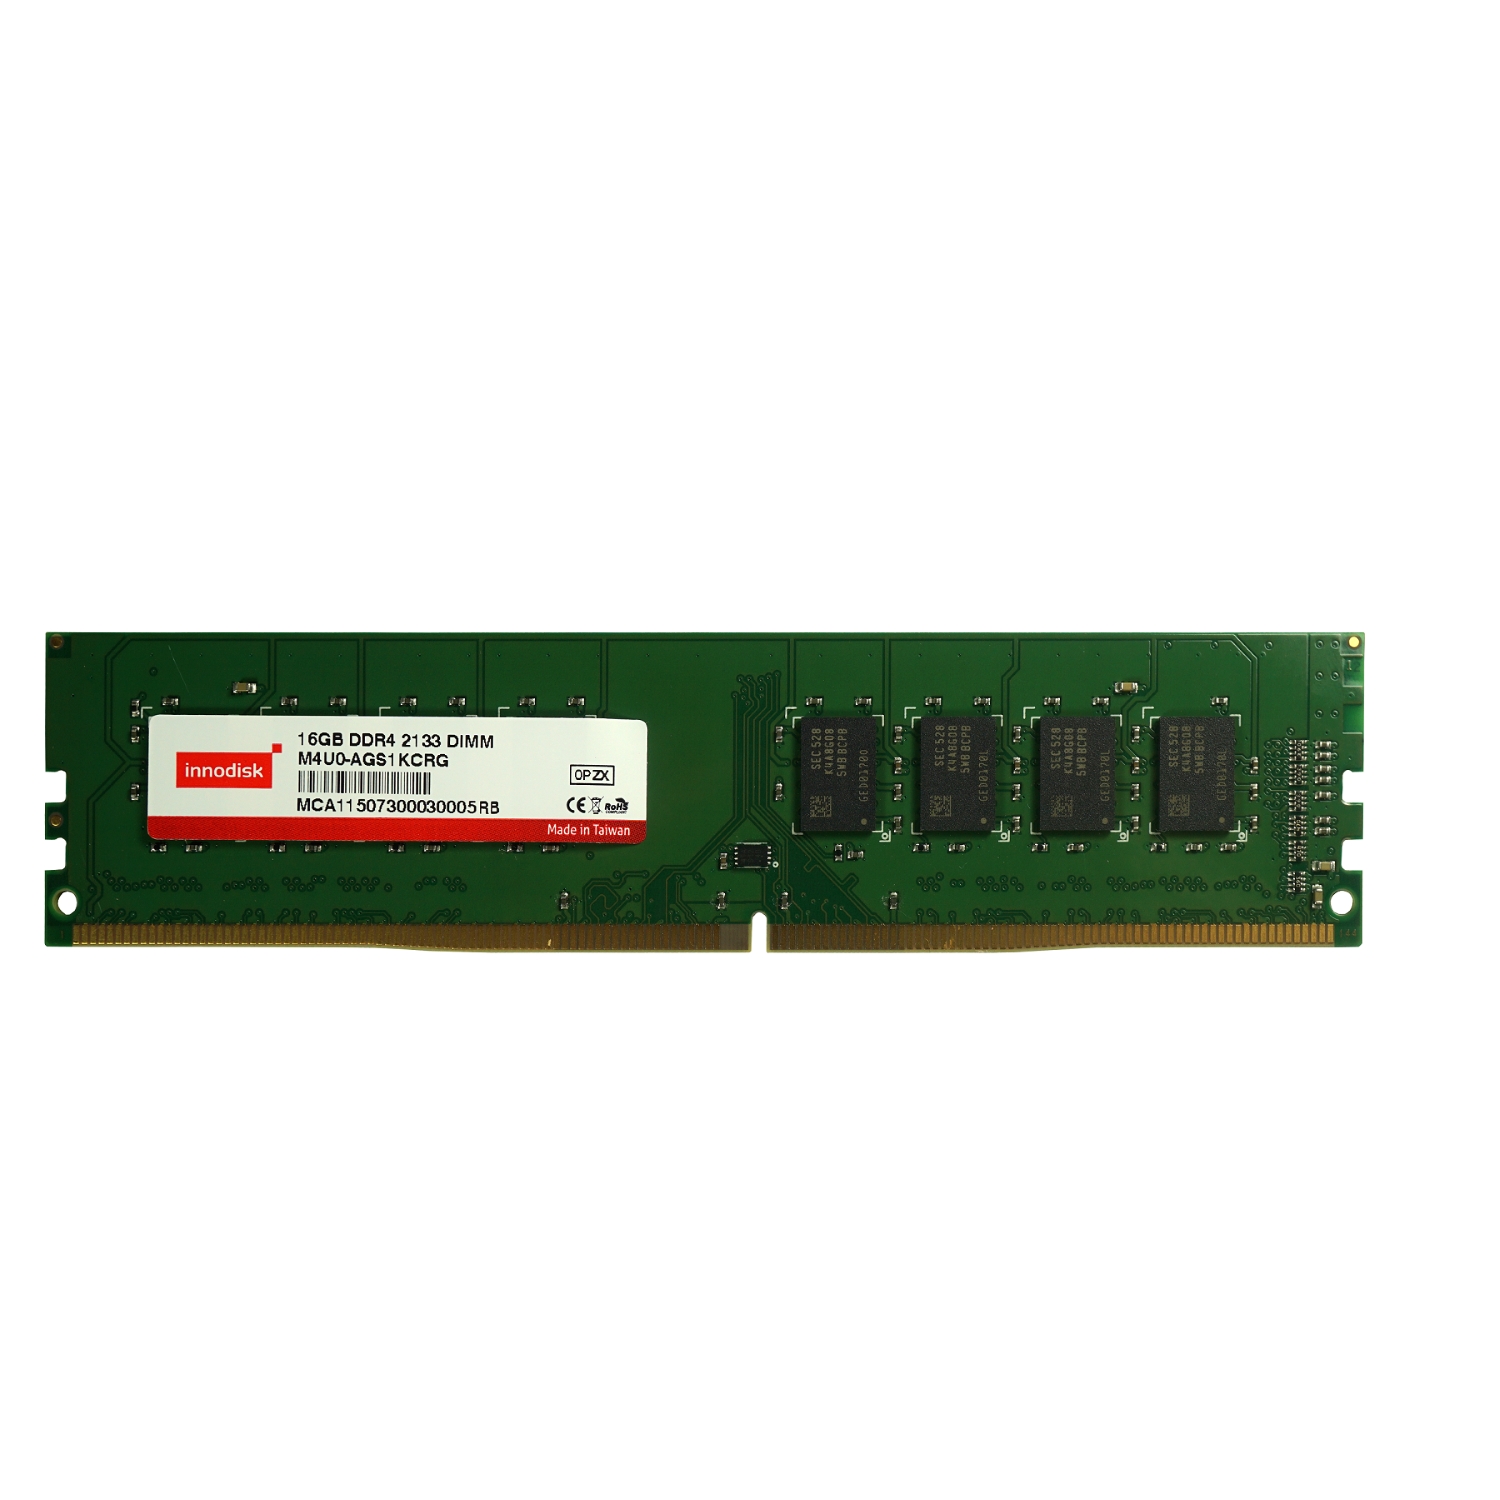 Embedded_DDR4_Long-DIMM_16G